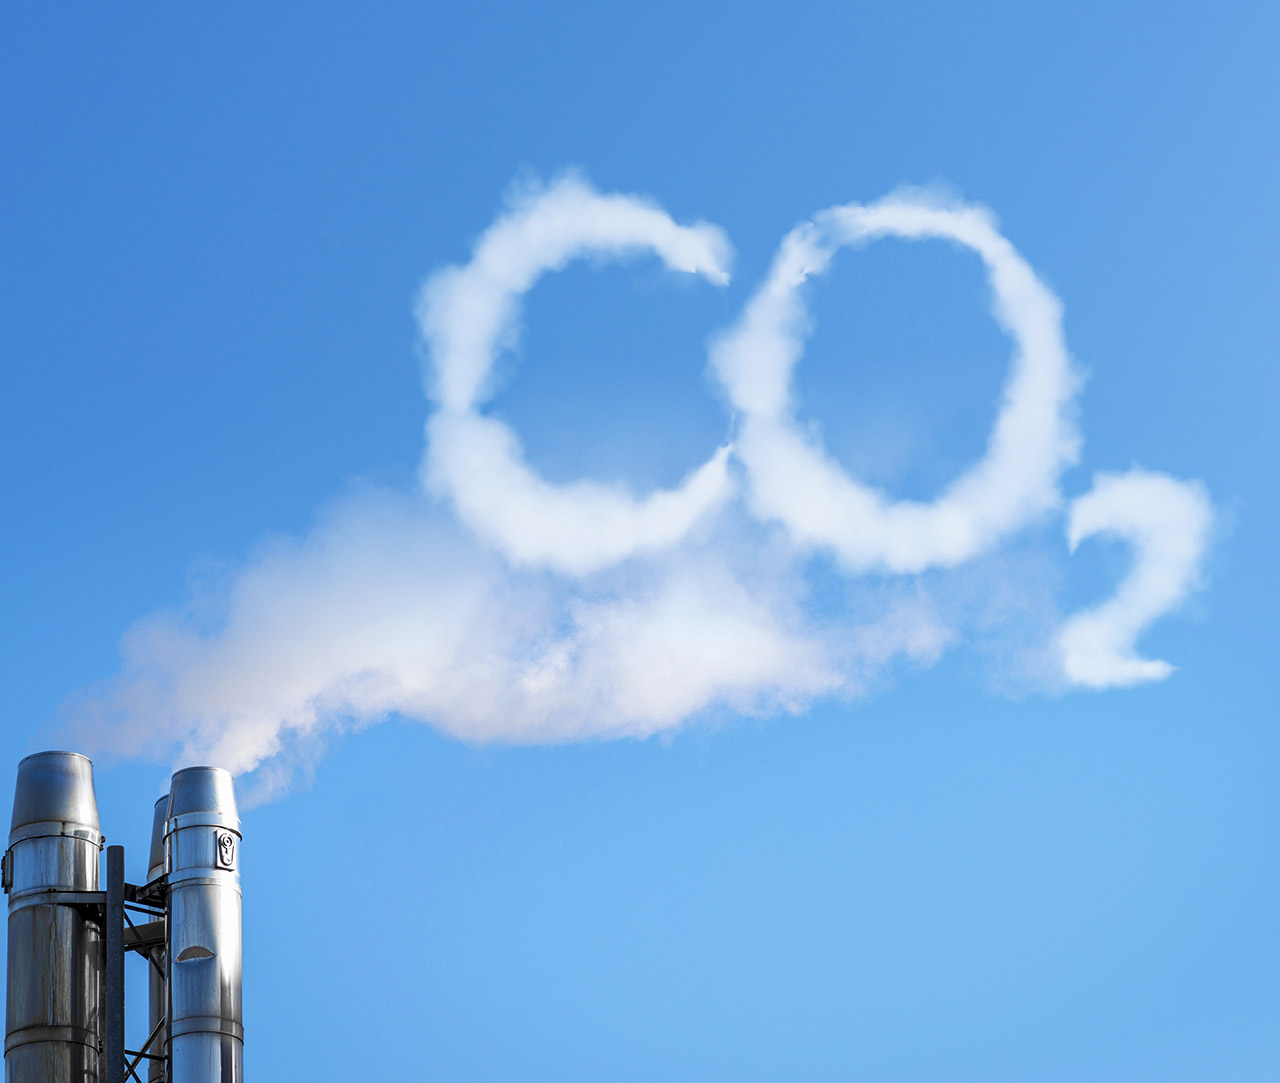 CO2 contamination